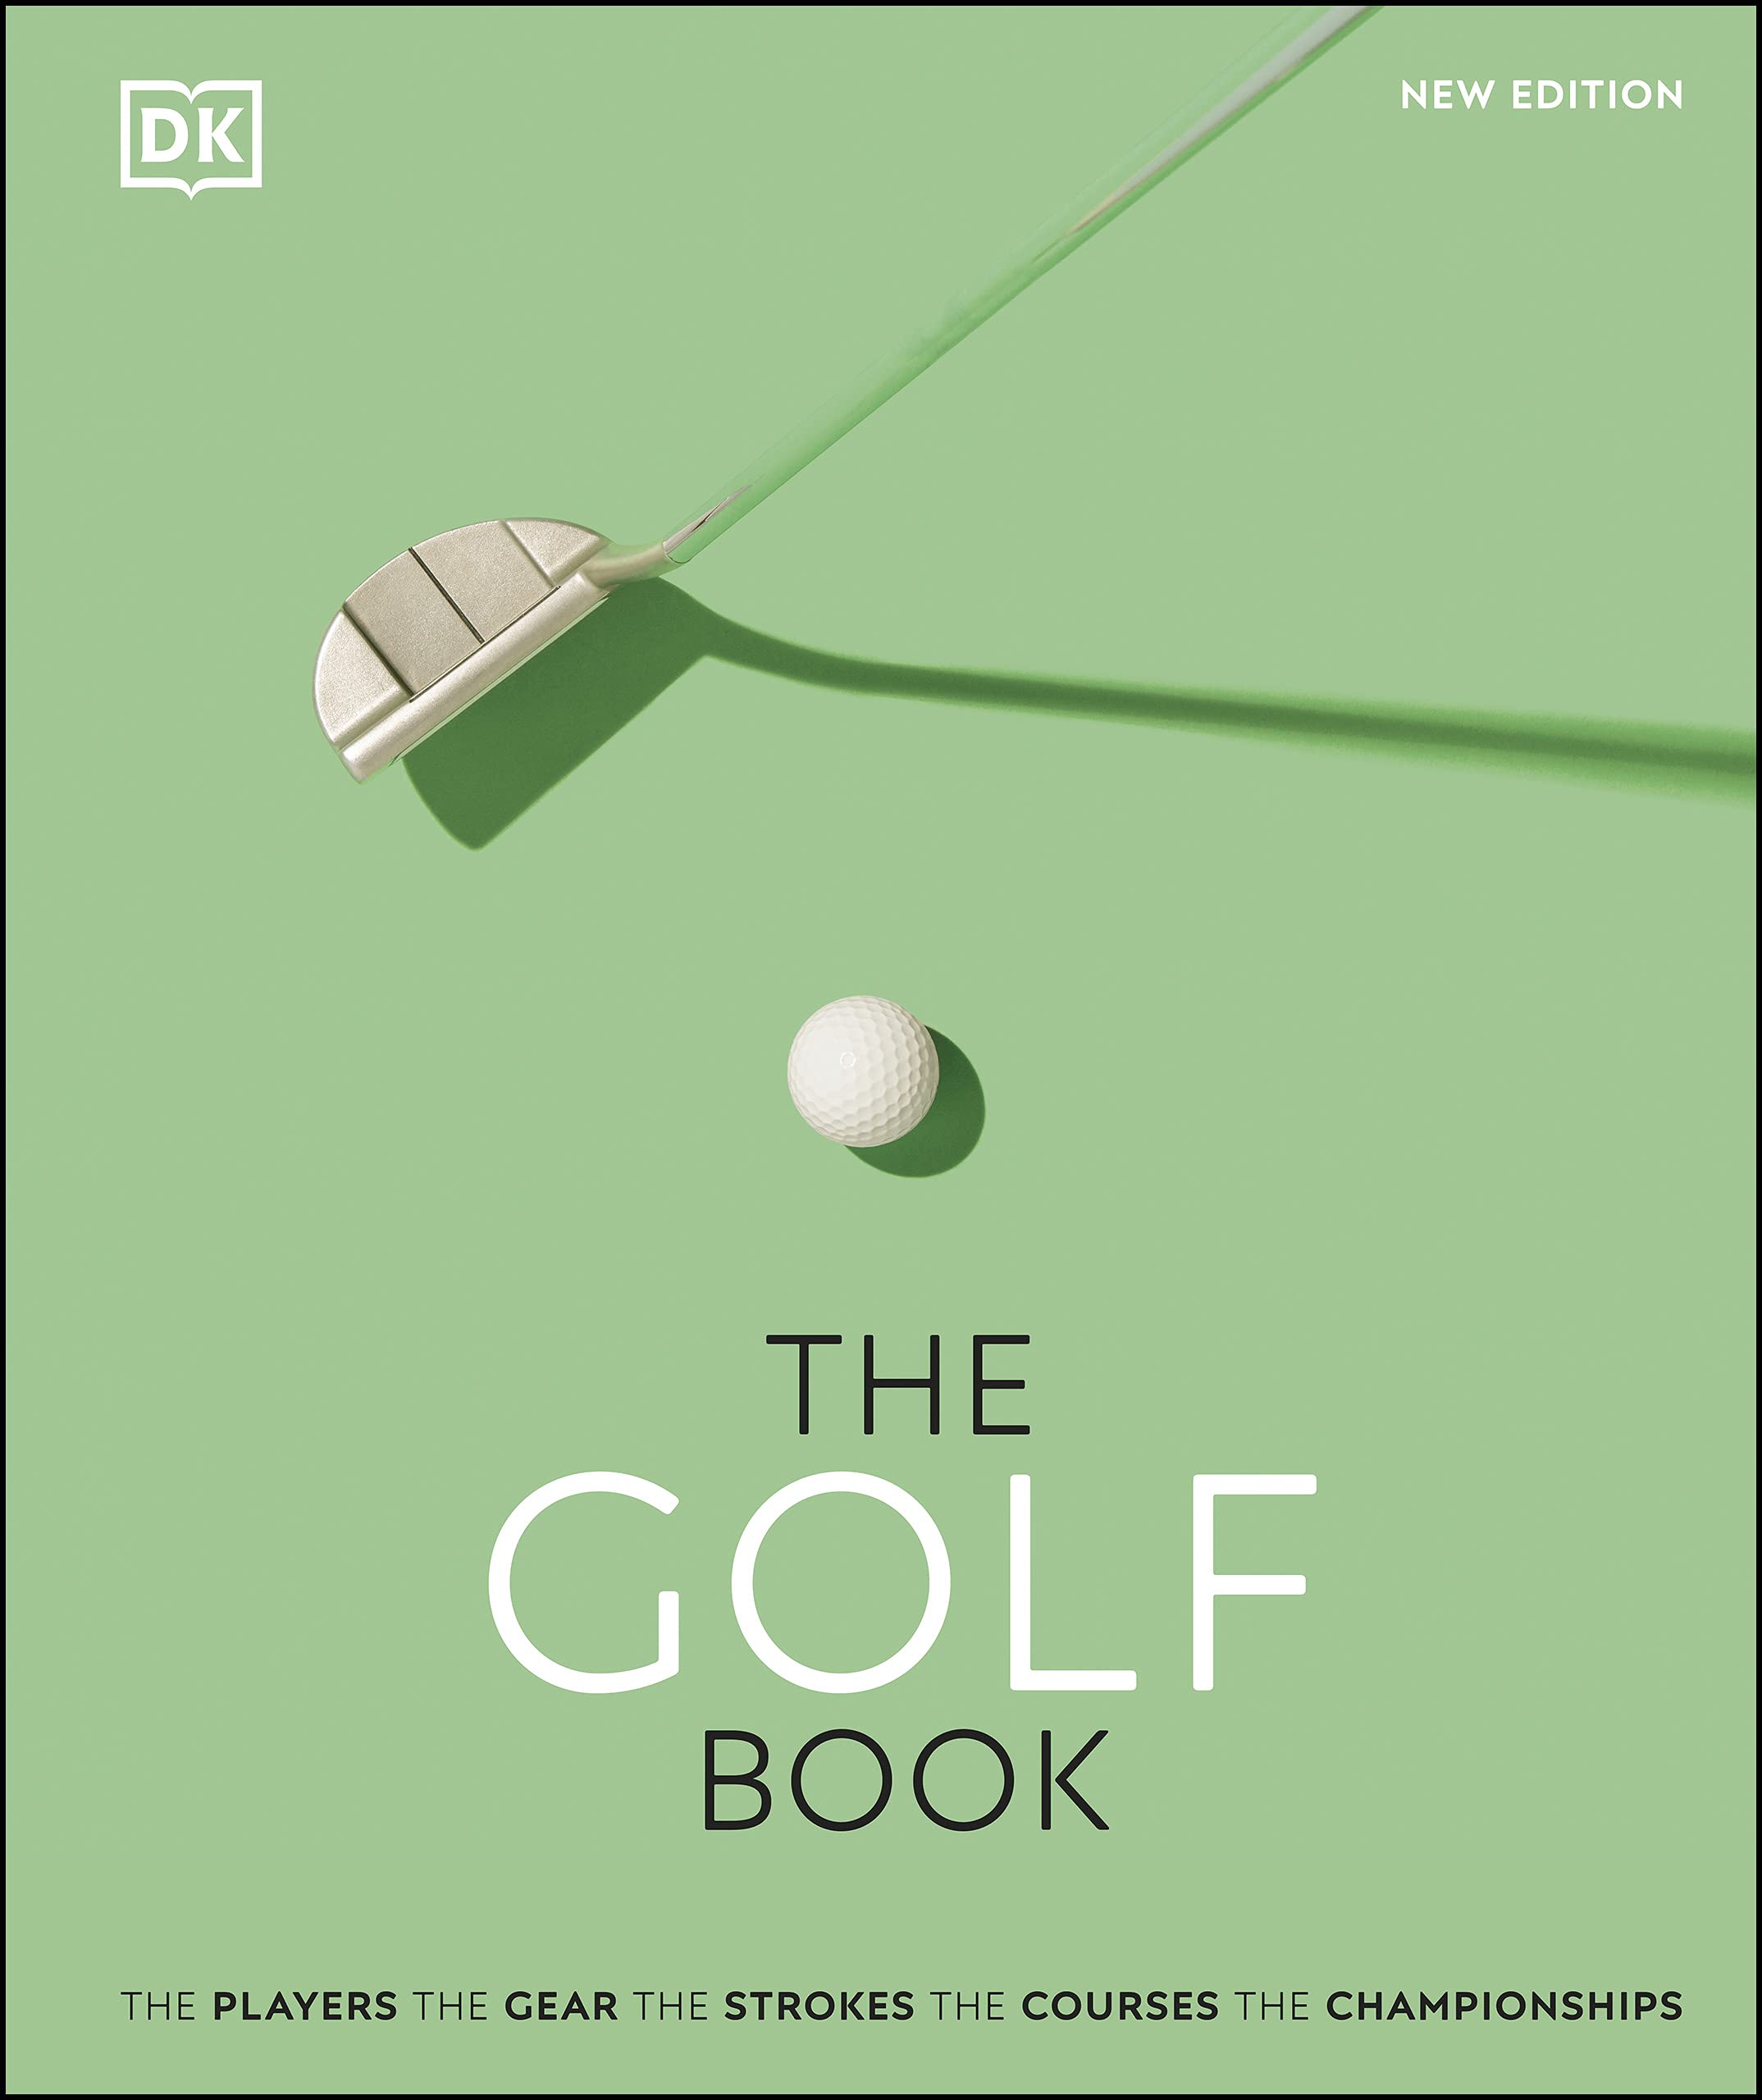 The Golf Book (DK Sports Guides) (eBook) by DK $1.99